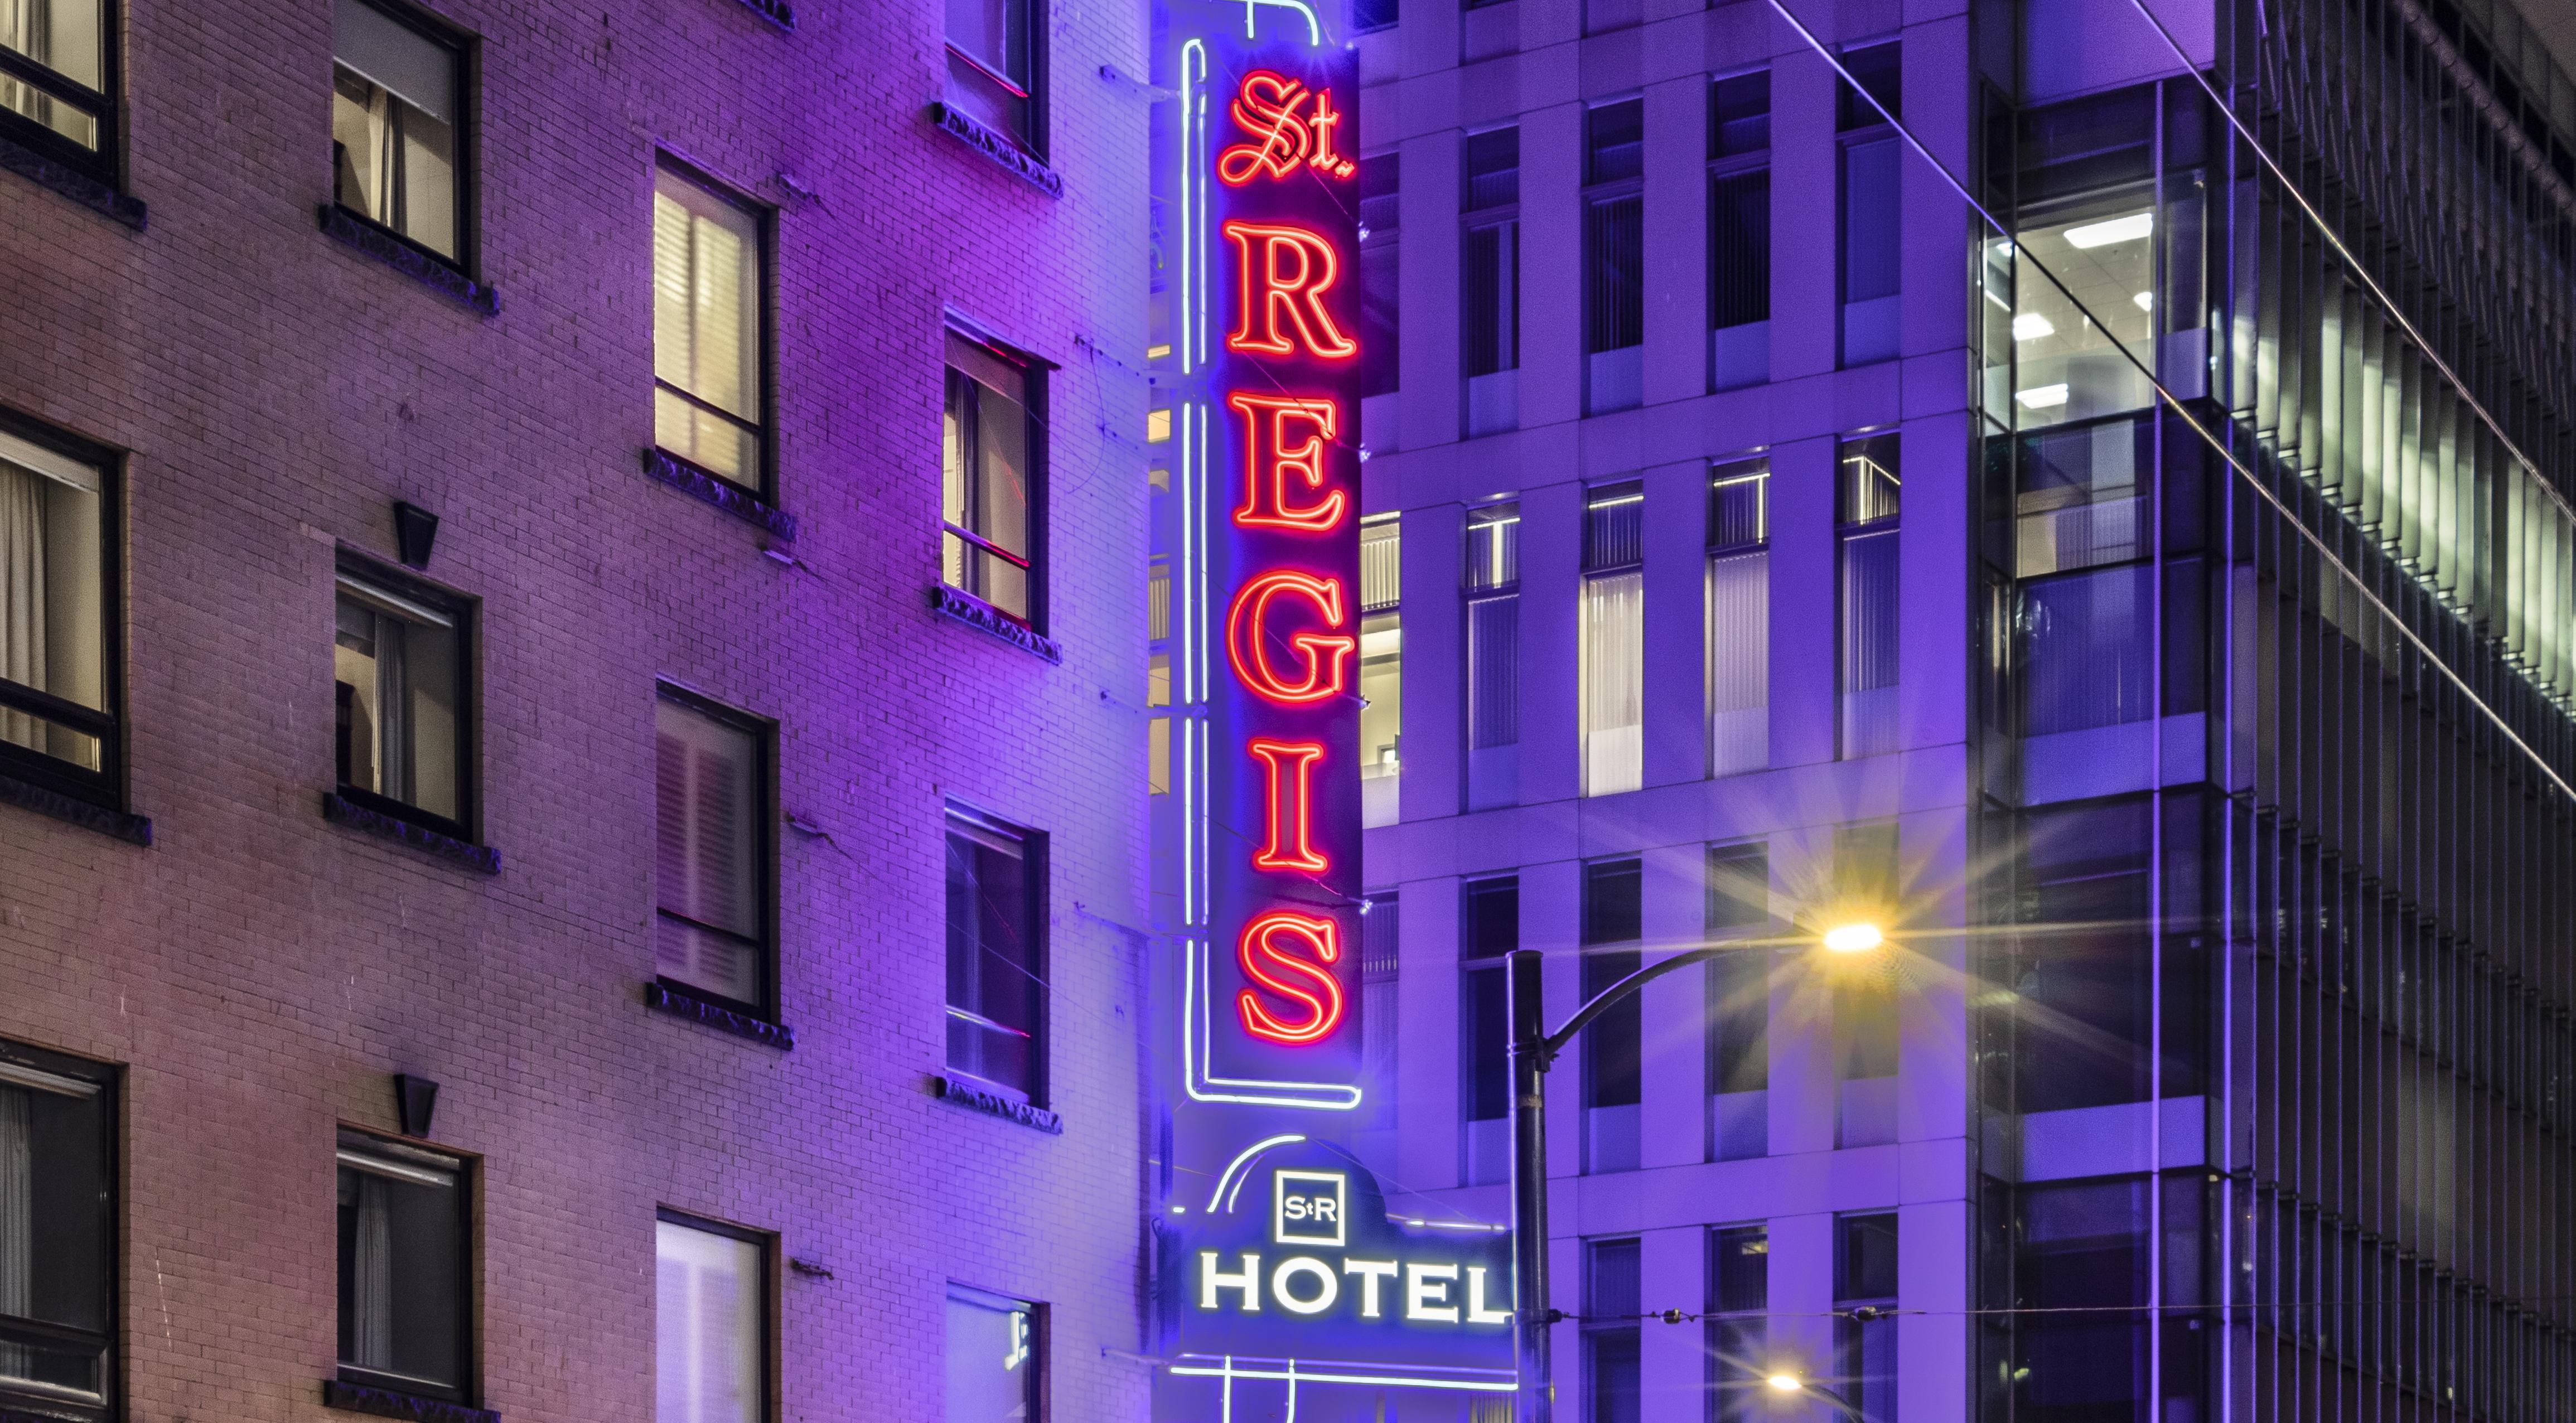 Imperial Sign of St. Regis Hotel.